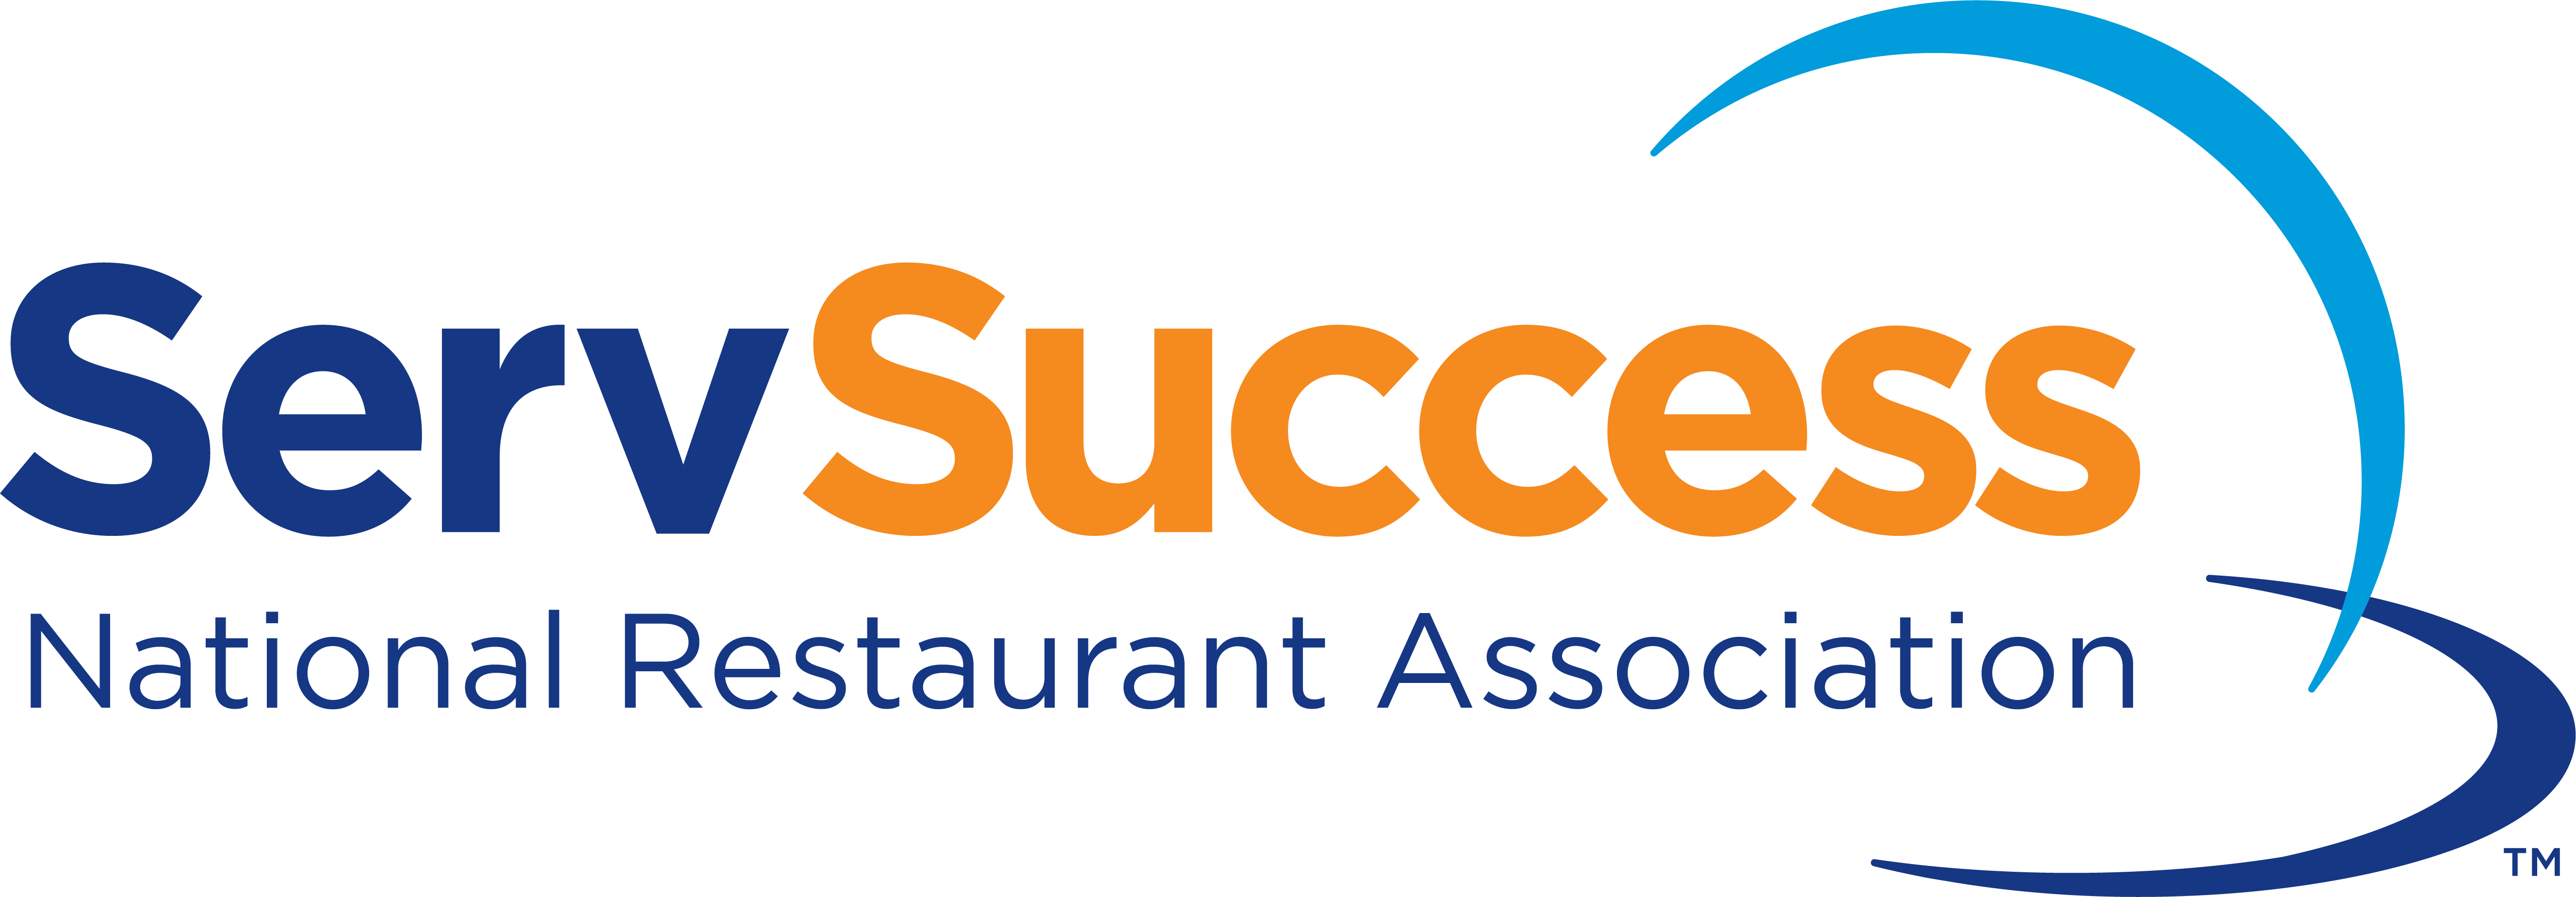 National Restaurant Association ServSuccess